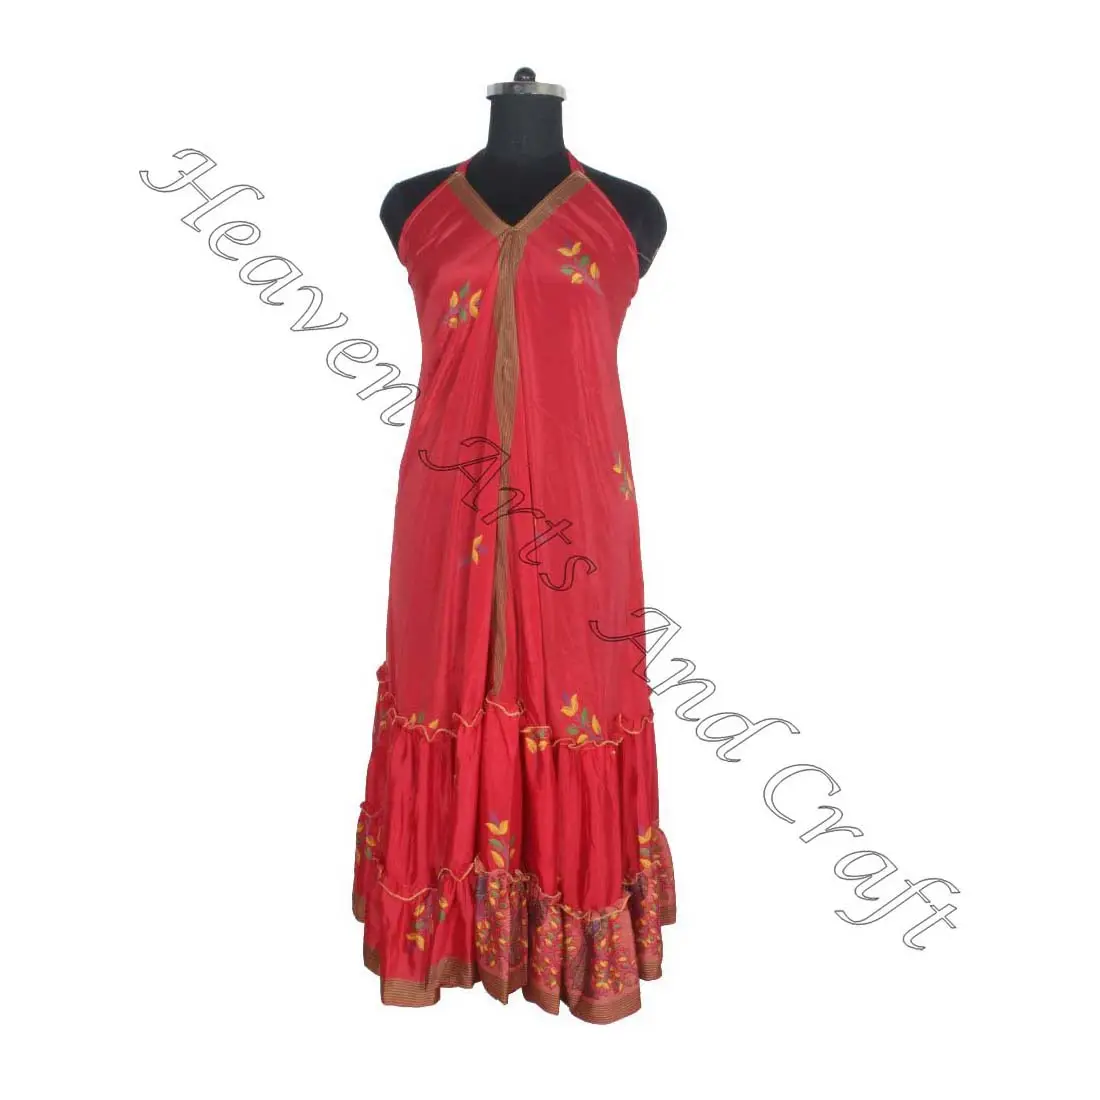 SD020 Saree / Sari / Shari Indian & Pakistani Clothing from India Hippy Boho Latest Traditional Long V-Neck Indian Vintage Sari